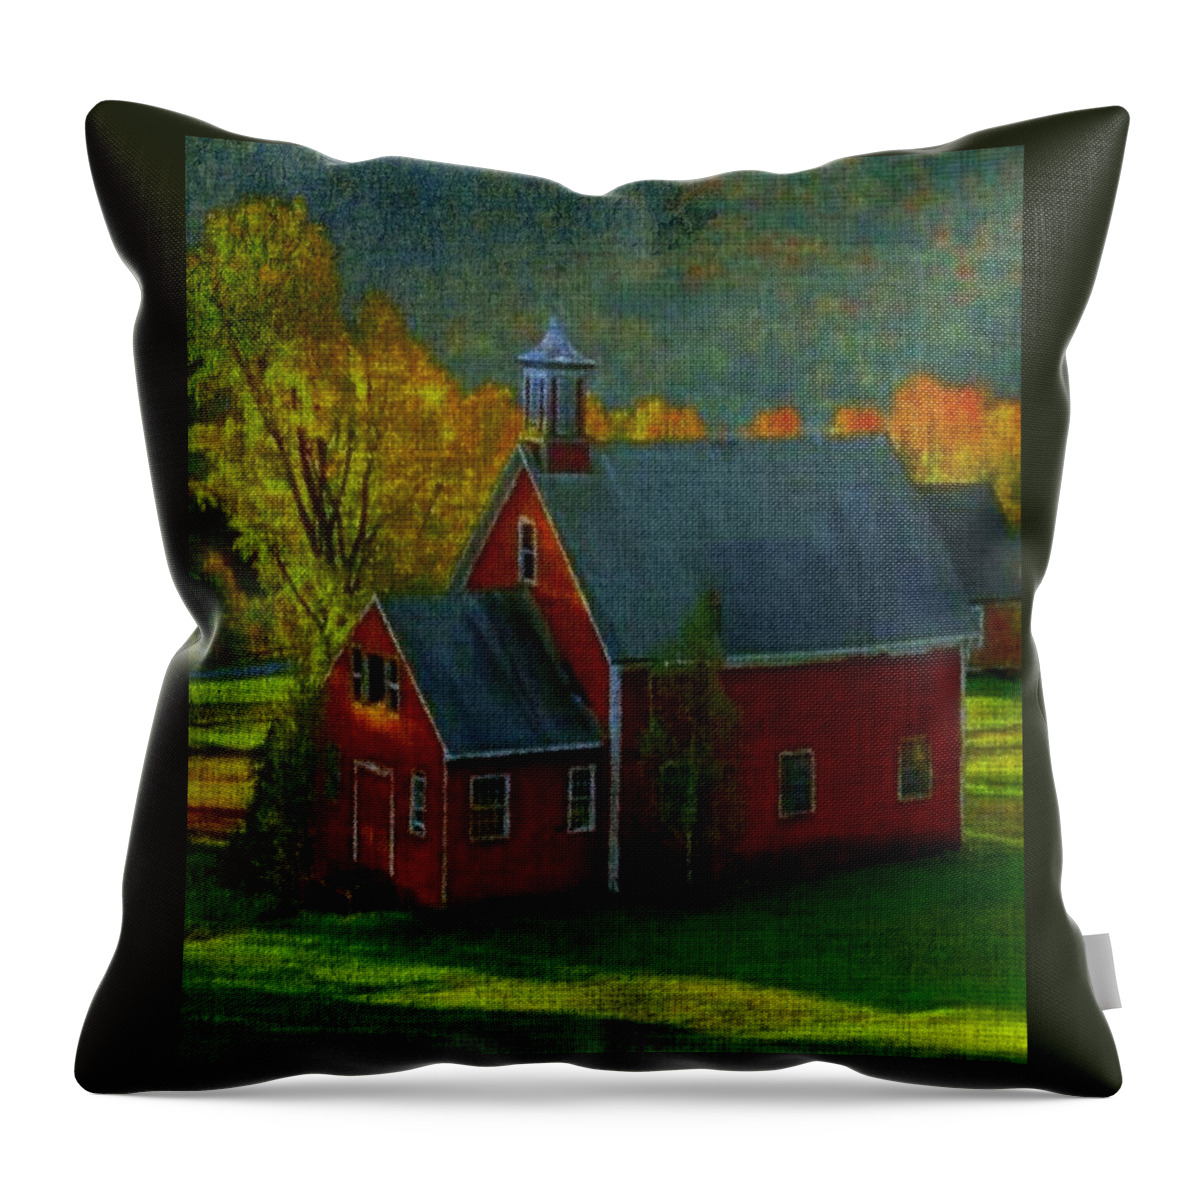 Farm Throw Pillow featuring the photograph On the Farm by Digital Art Cafe